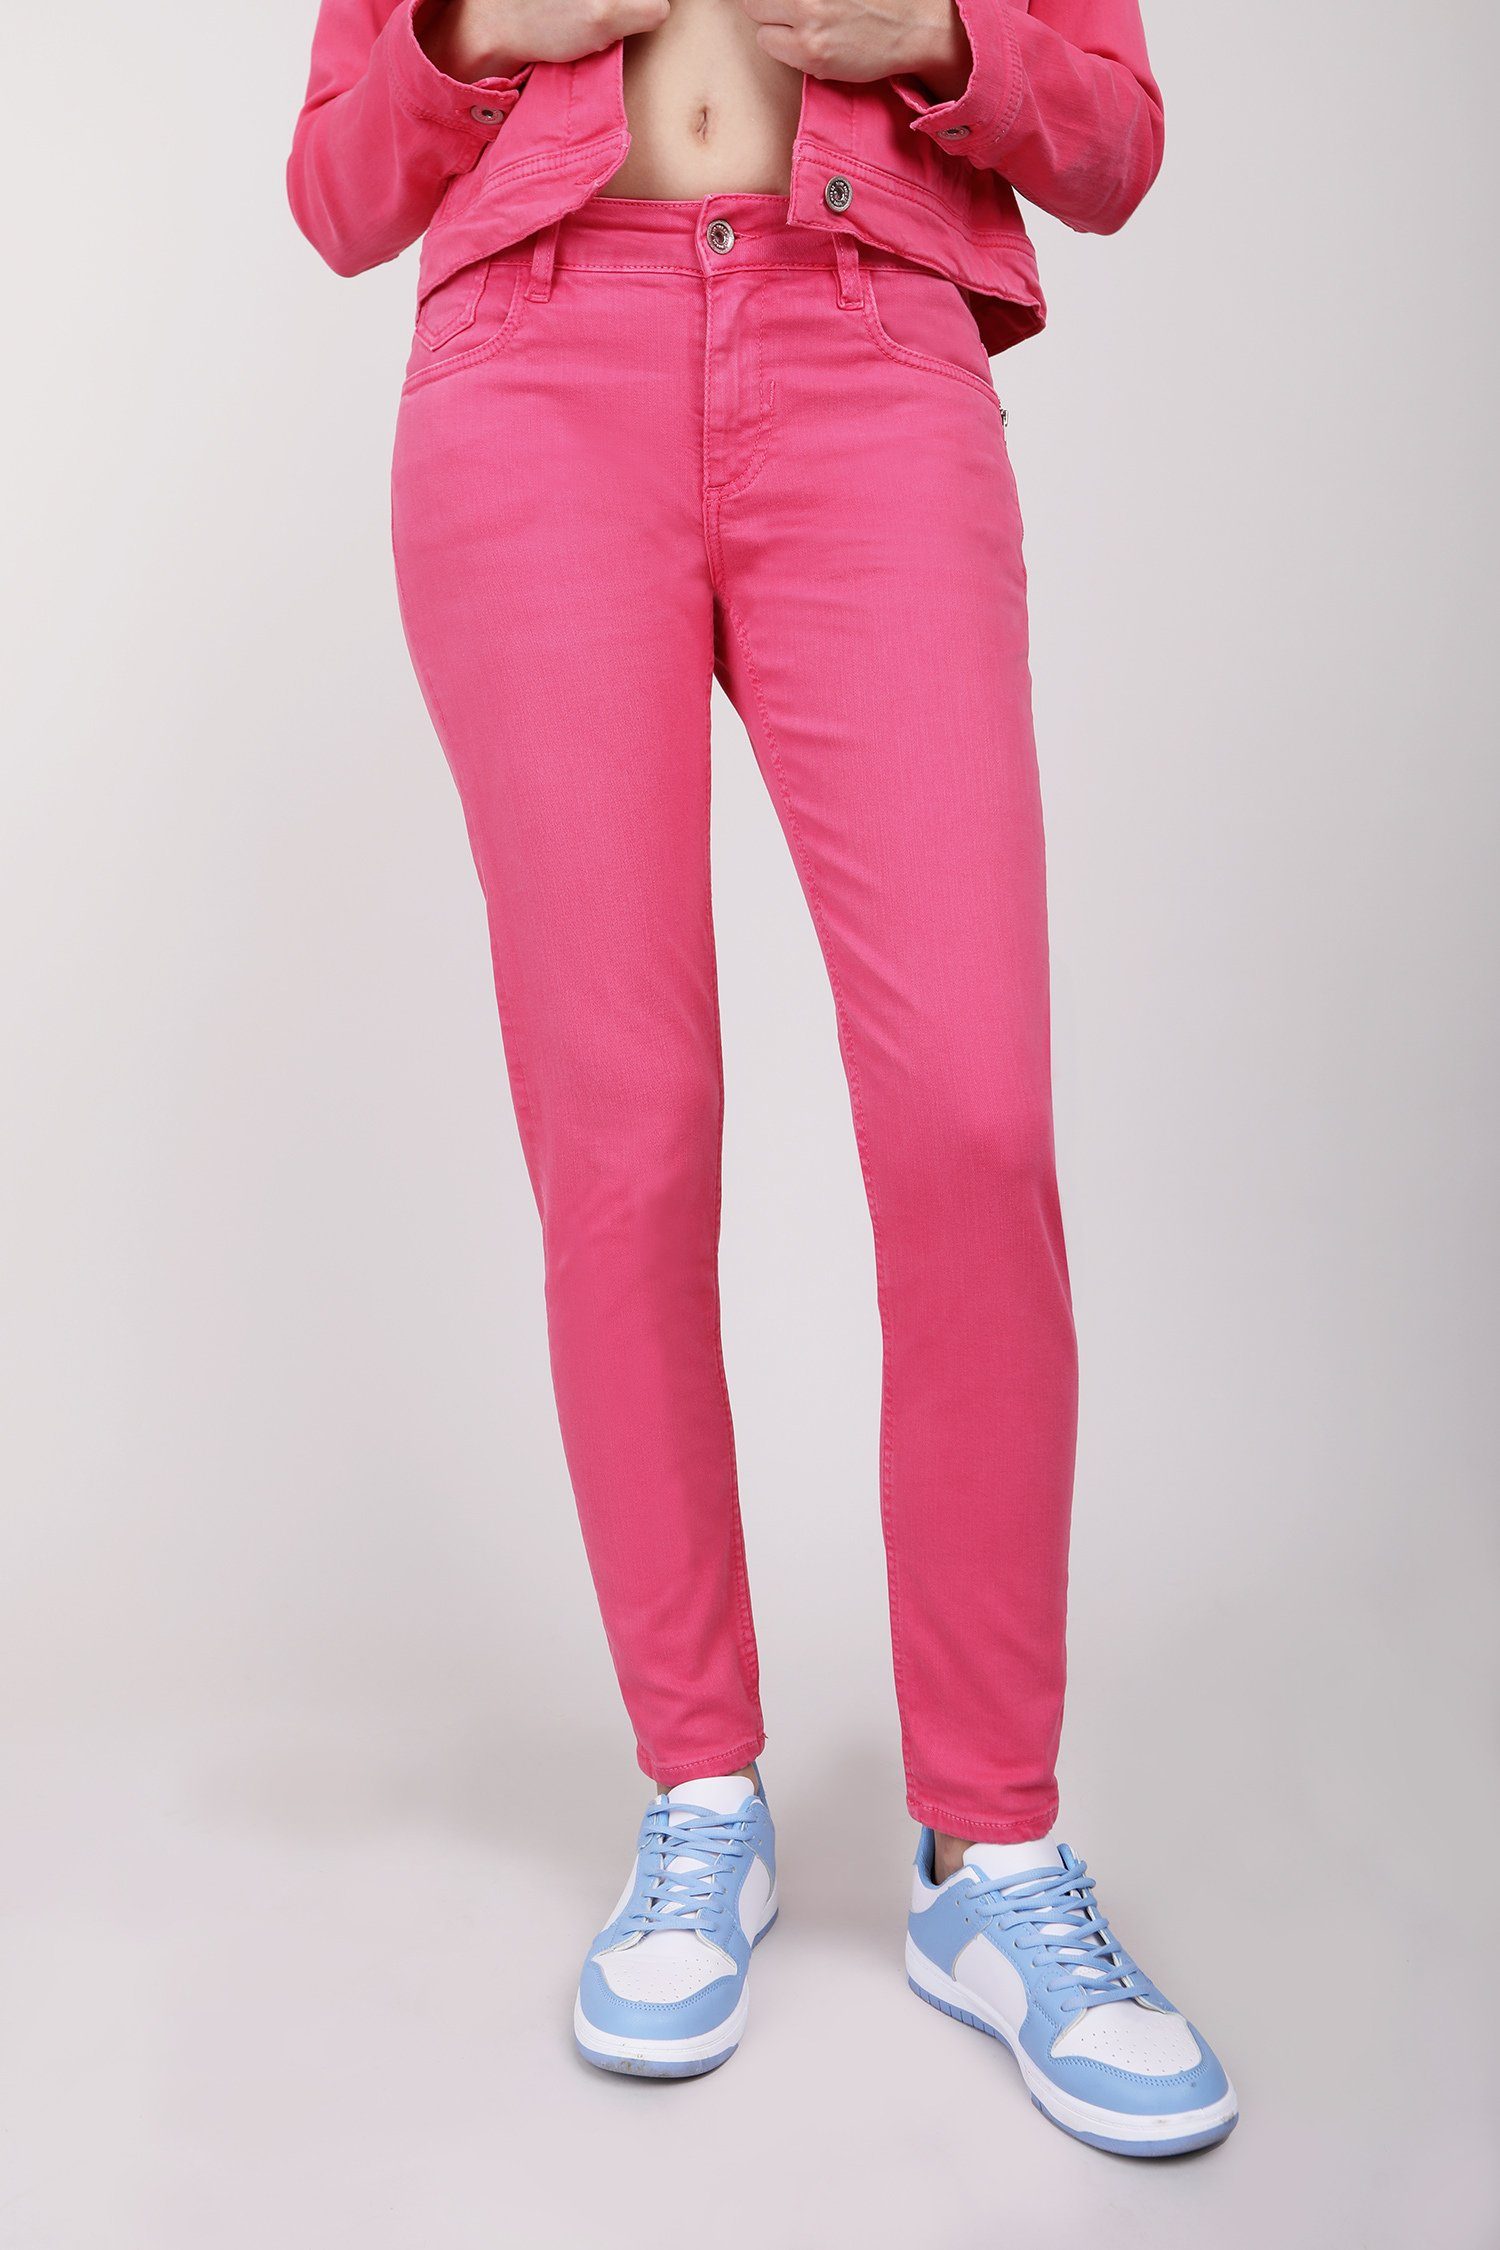 Utility FIRE Pants Skinny-fit-Jeans Blue - pink Chloe Fire denim 4042 Skinny BLUE Colors